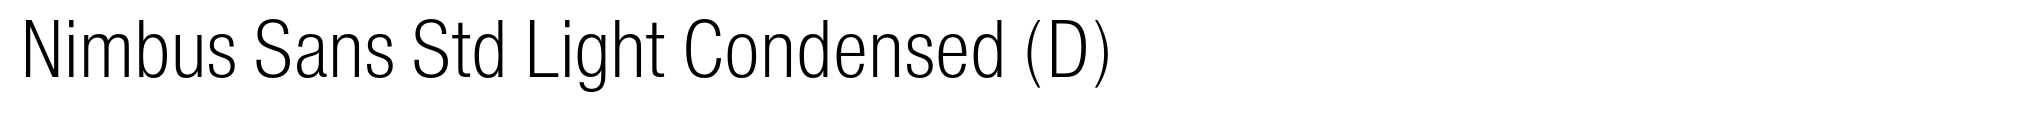 Nimbus Sans Std Light Condensed (D) image